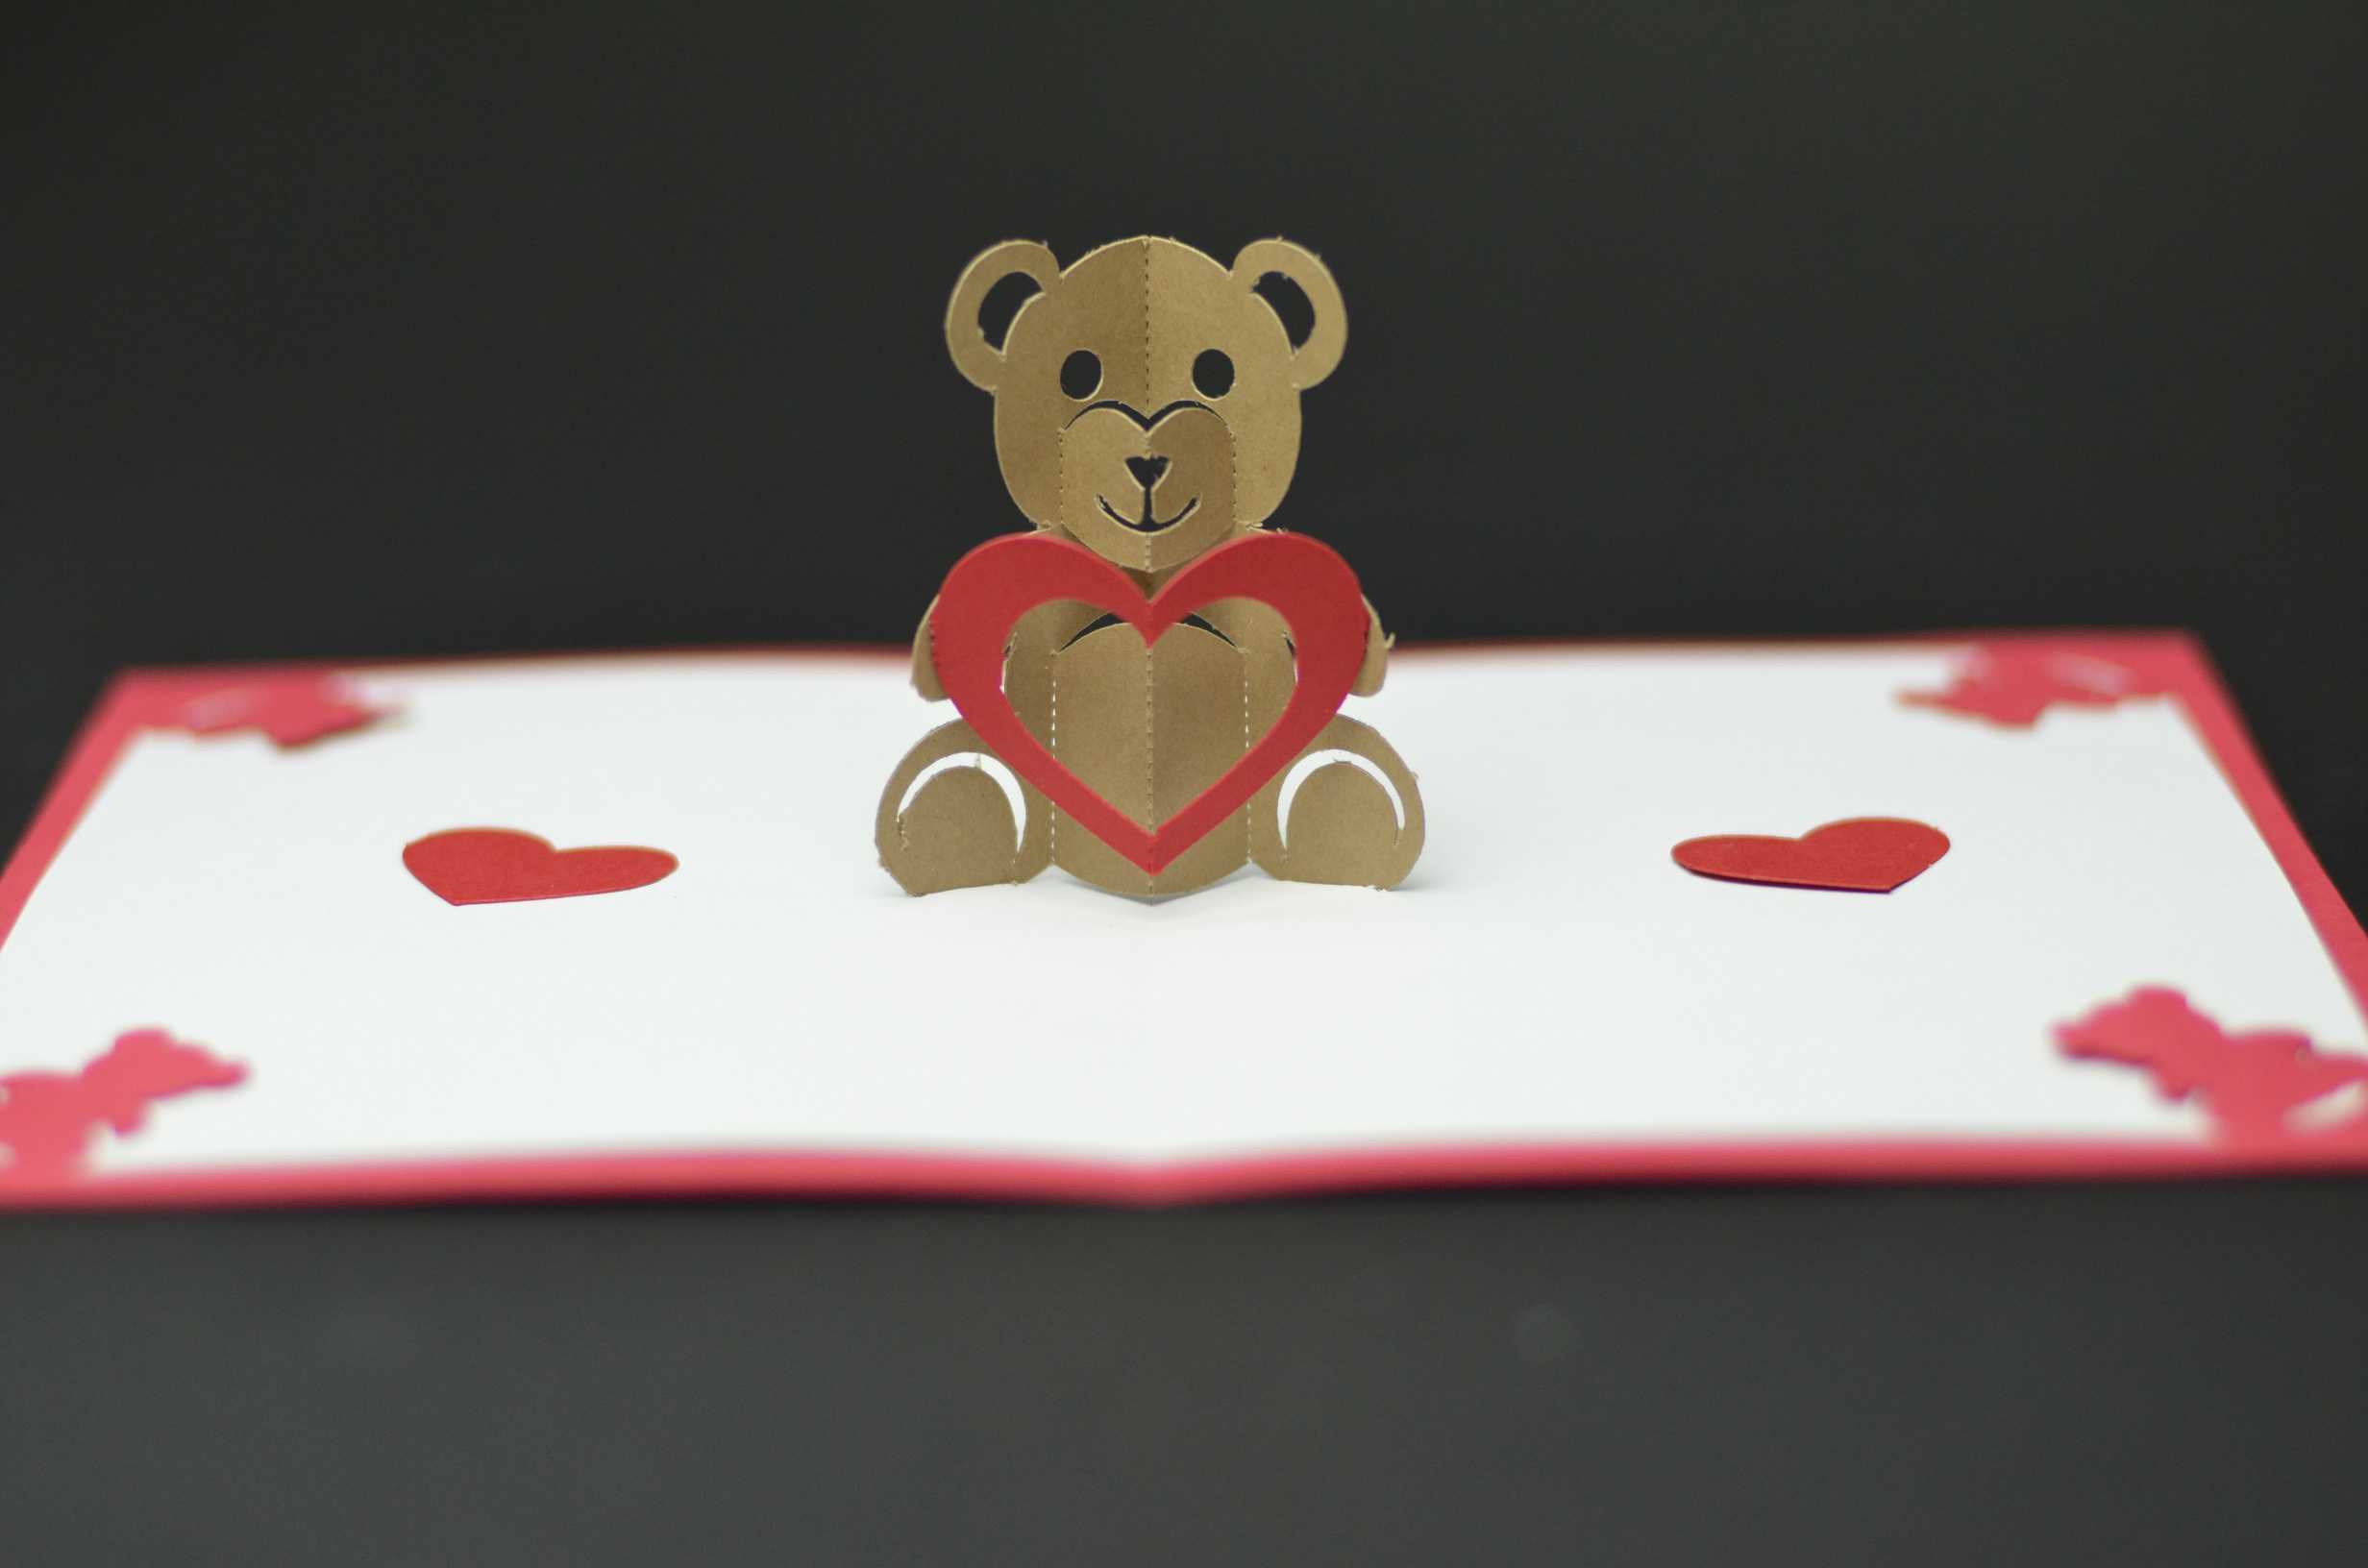 Pop Up Card Tutorials And Templates - Creative Pop Up Cards For Twisting Hearts Pop Up Card Template